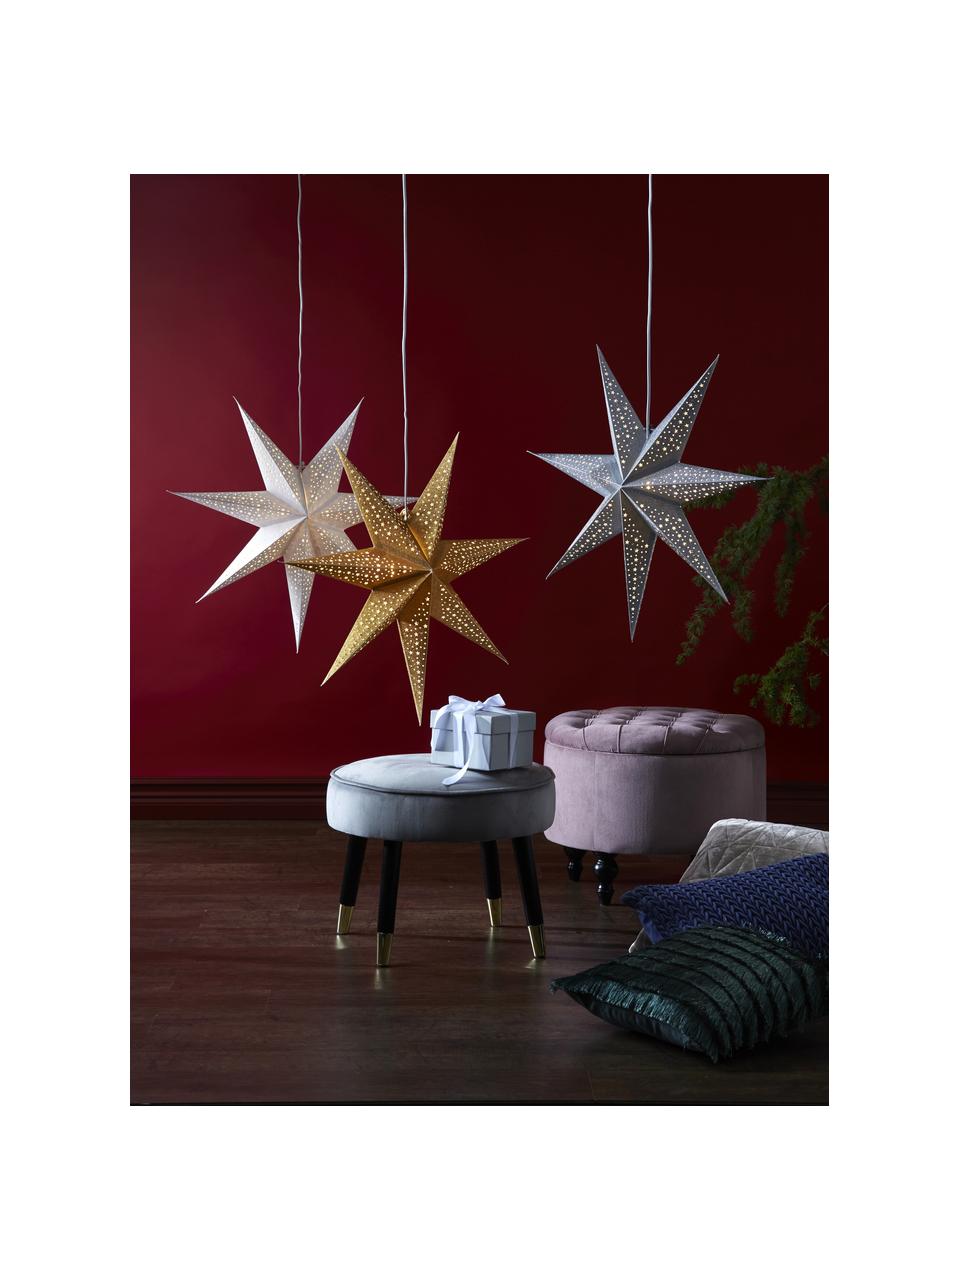 Estrella decorativa de papel Blinka, Papel, Blanco, Ø 60 cm